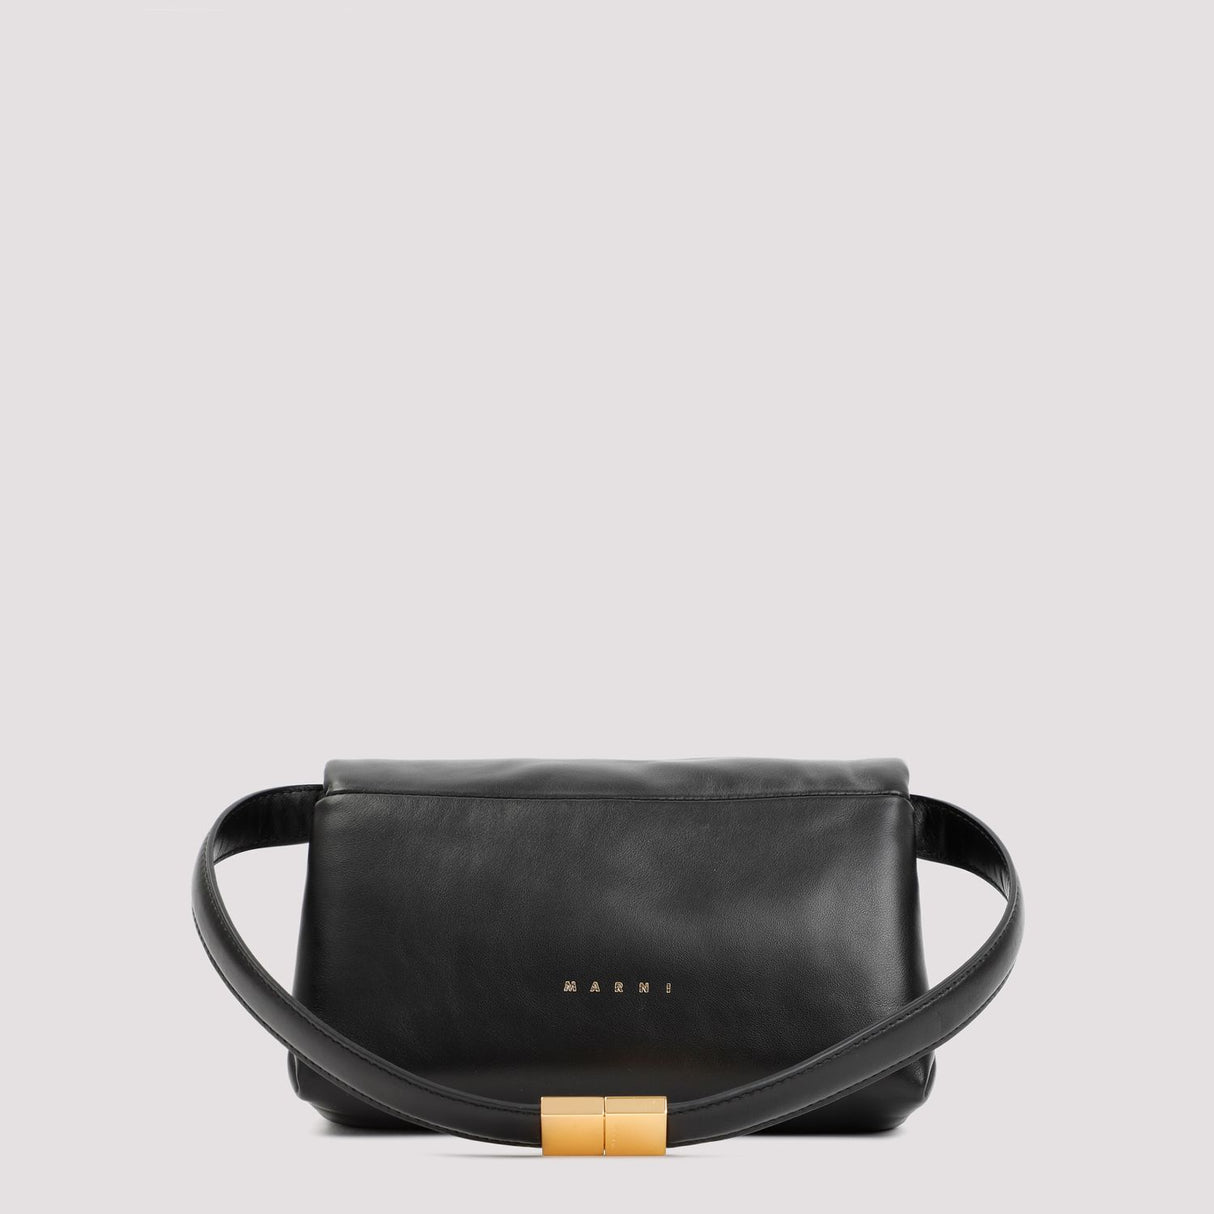 MARNI Chic Black Calf Leather Mini Clutch | Women's Handbag - 21x12x10 cm